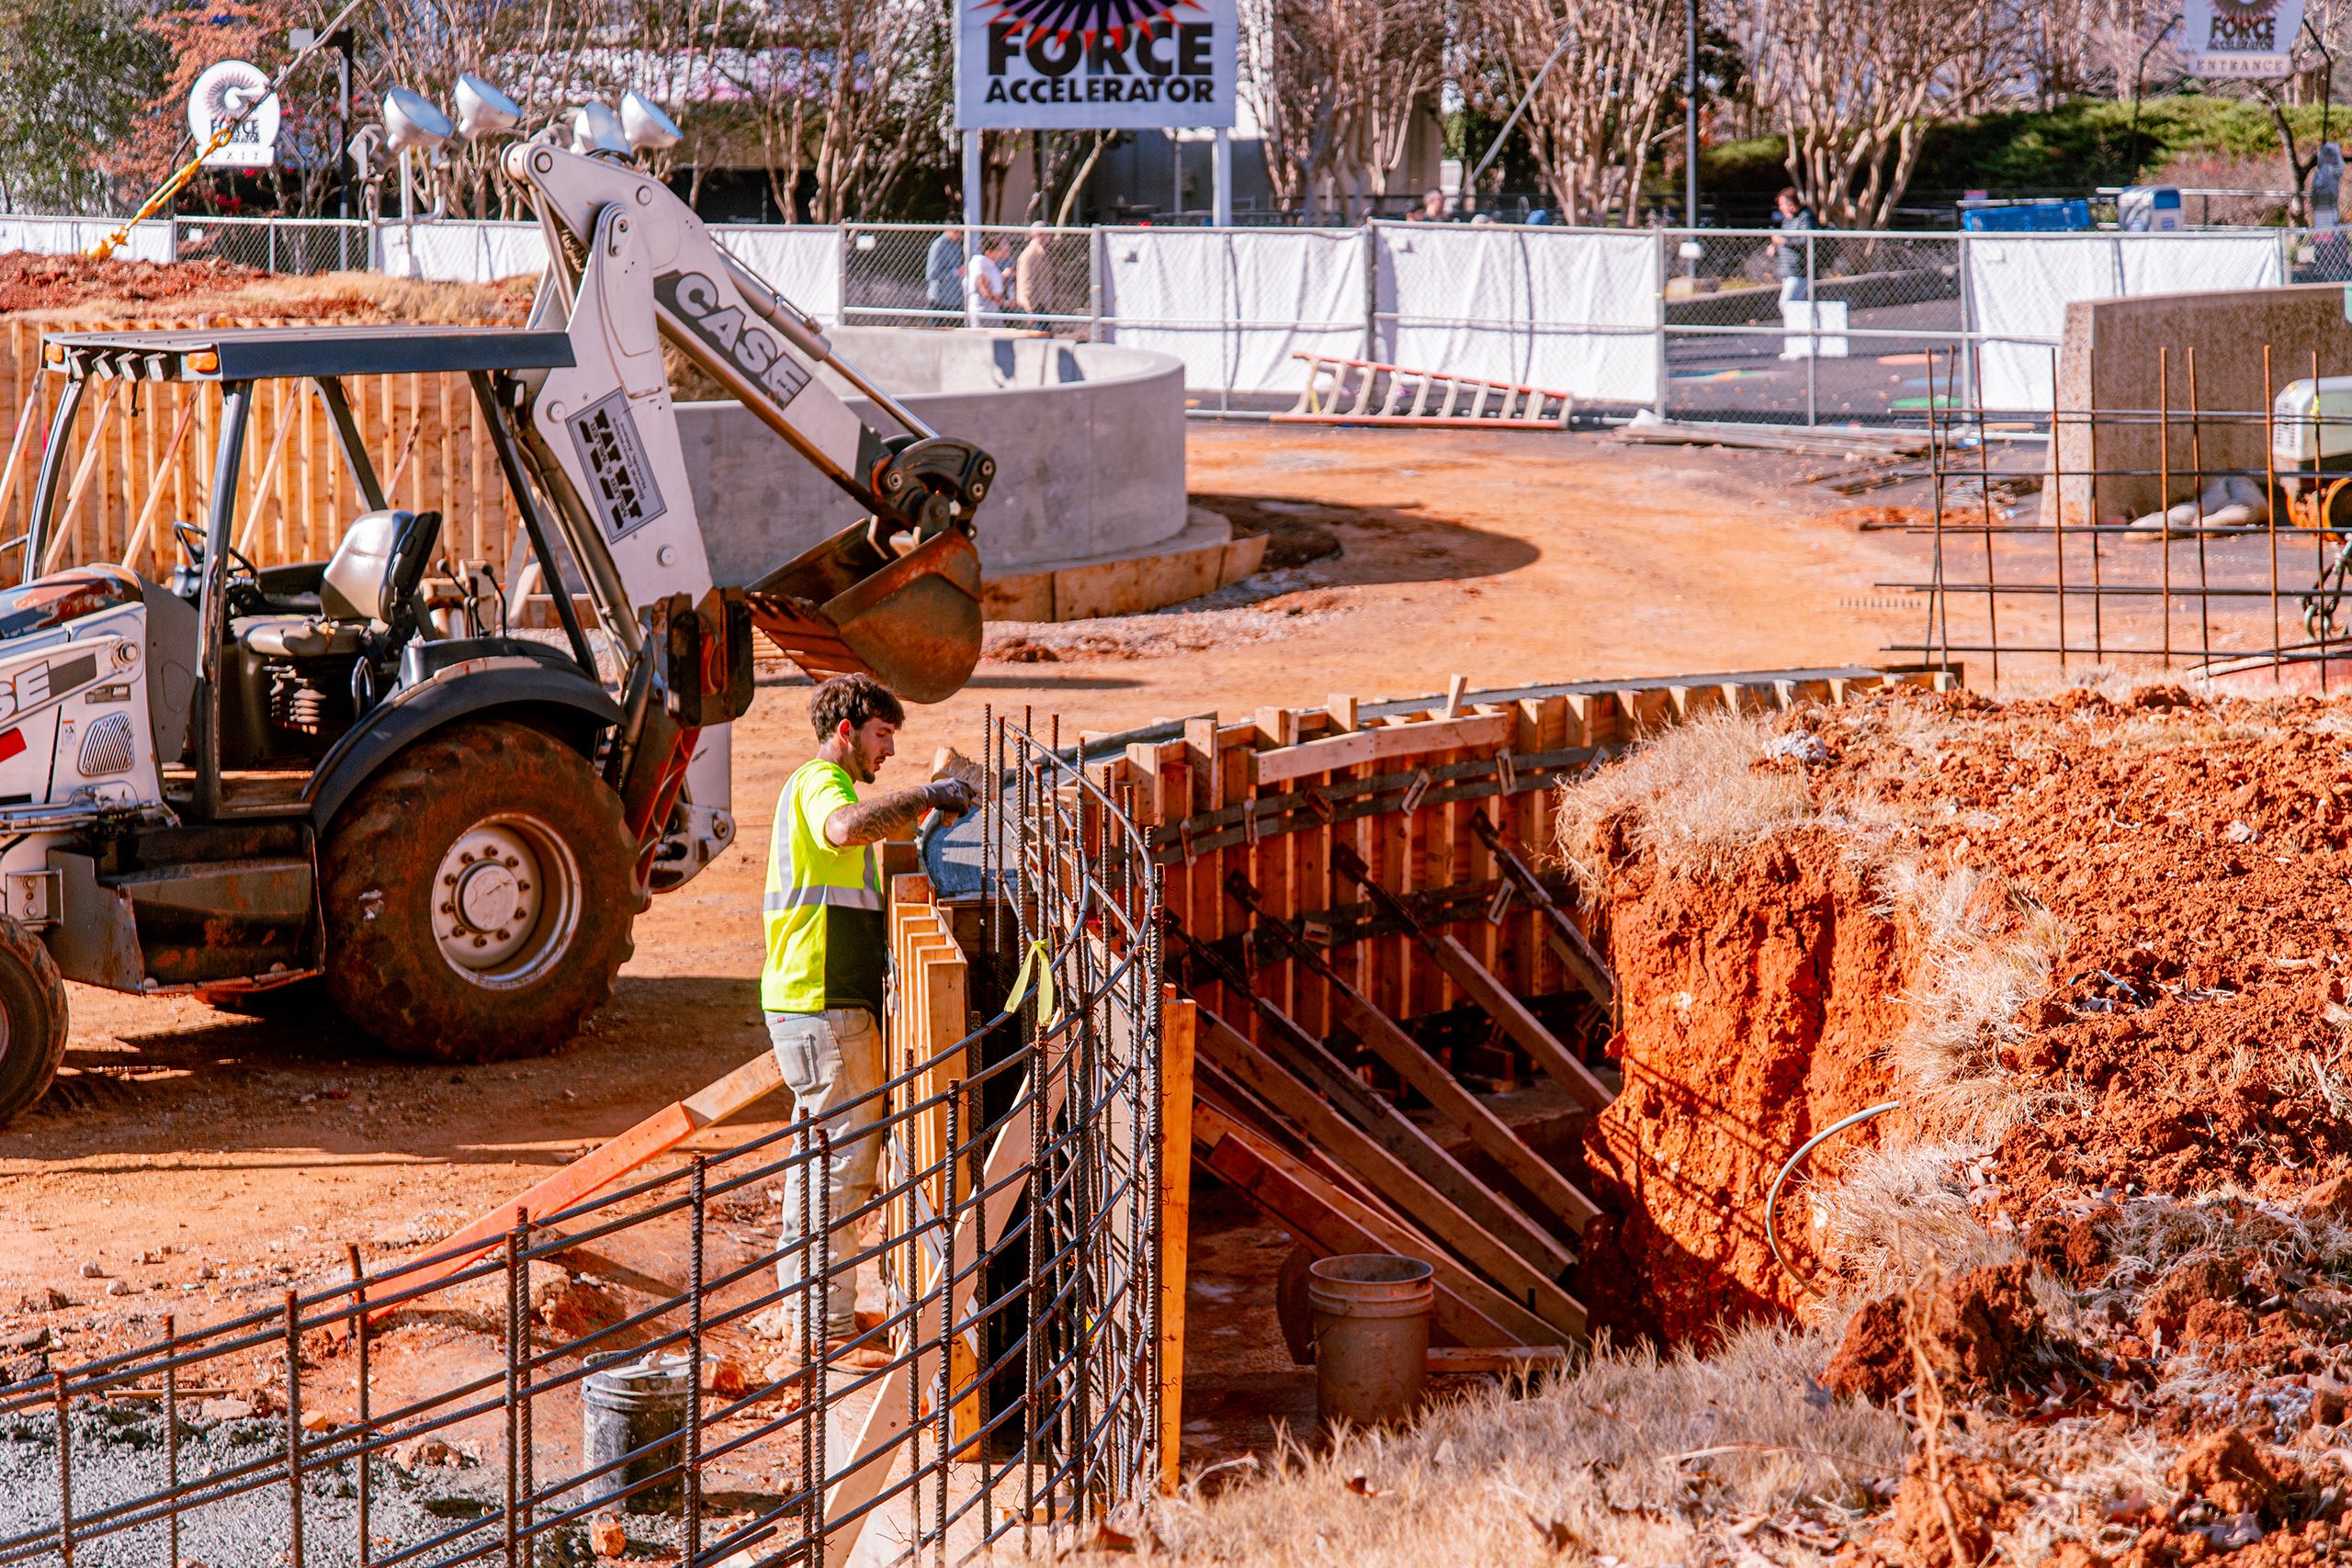 Wall construction underway at Rocket park.